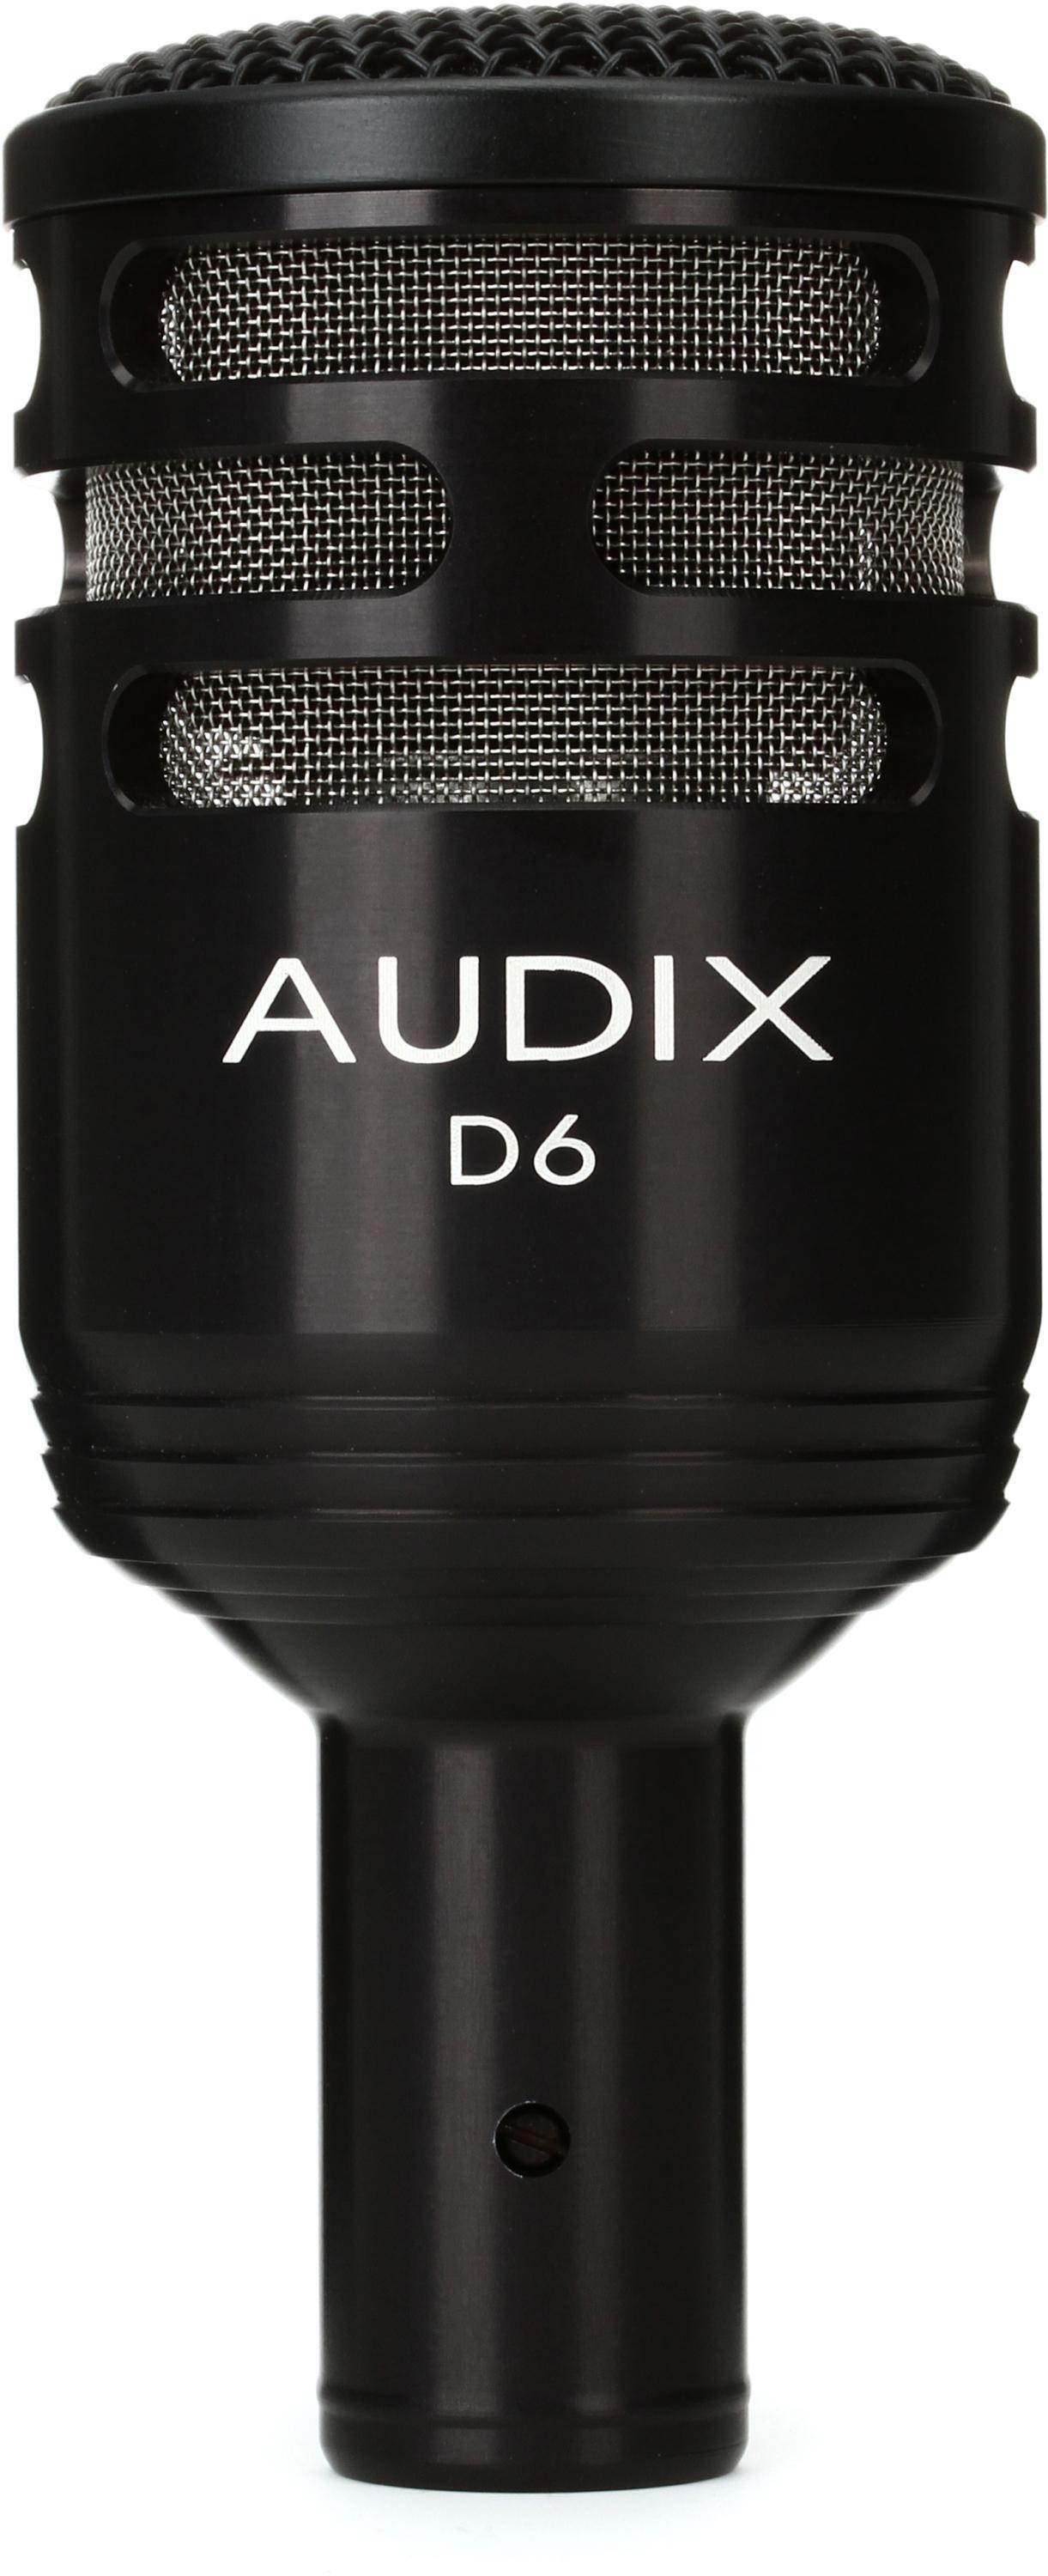 Bundled Item: Audix D6 Cardioid Dynamic Kick Drum Microphone